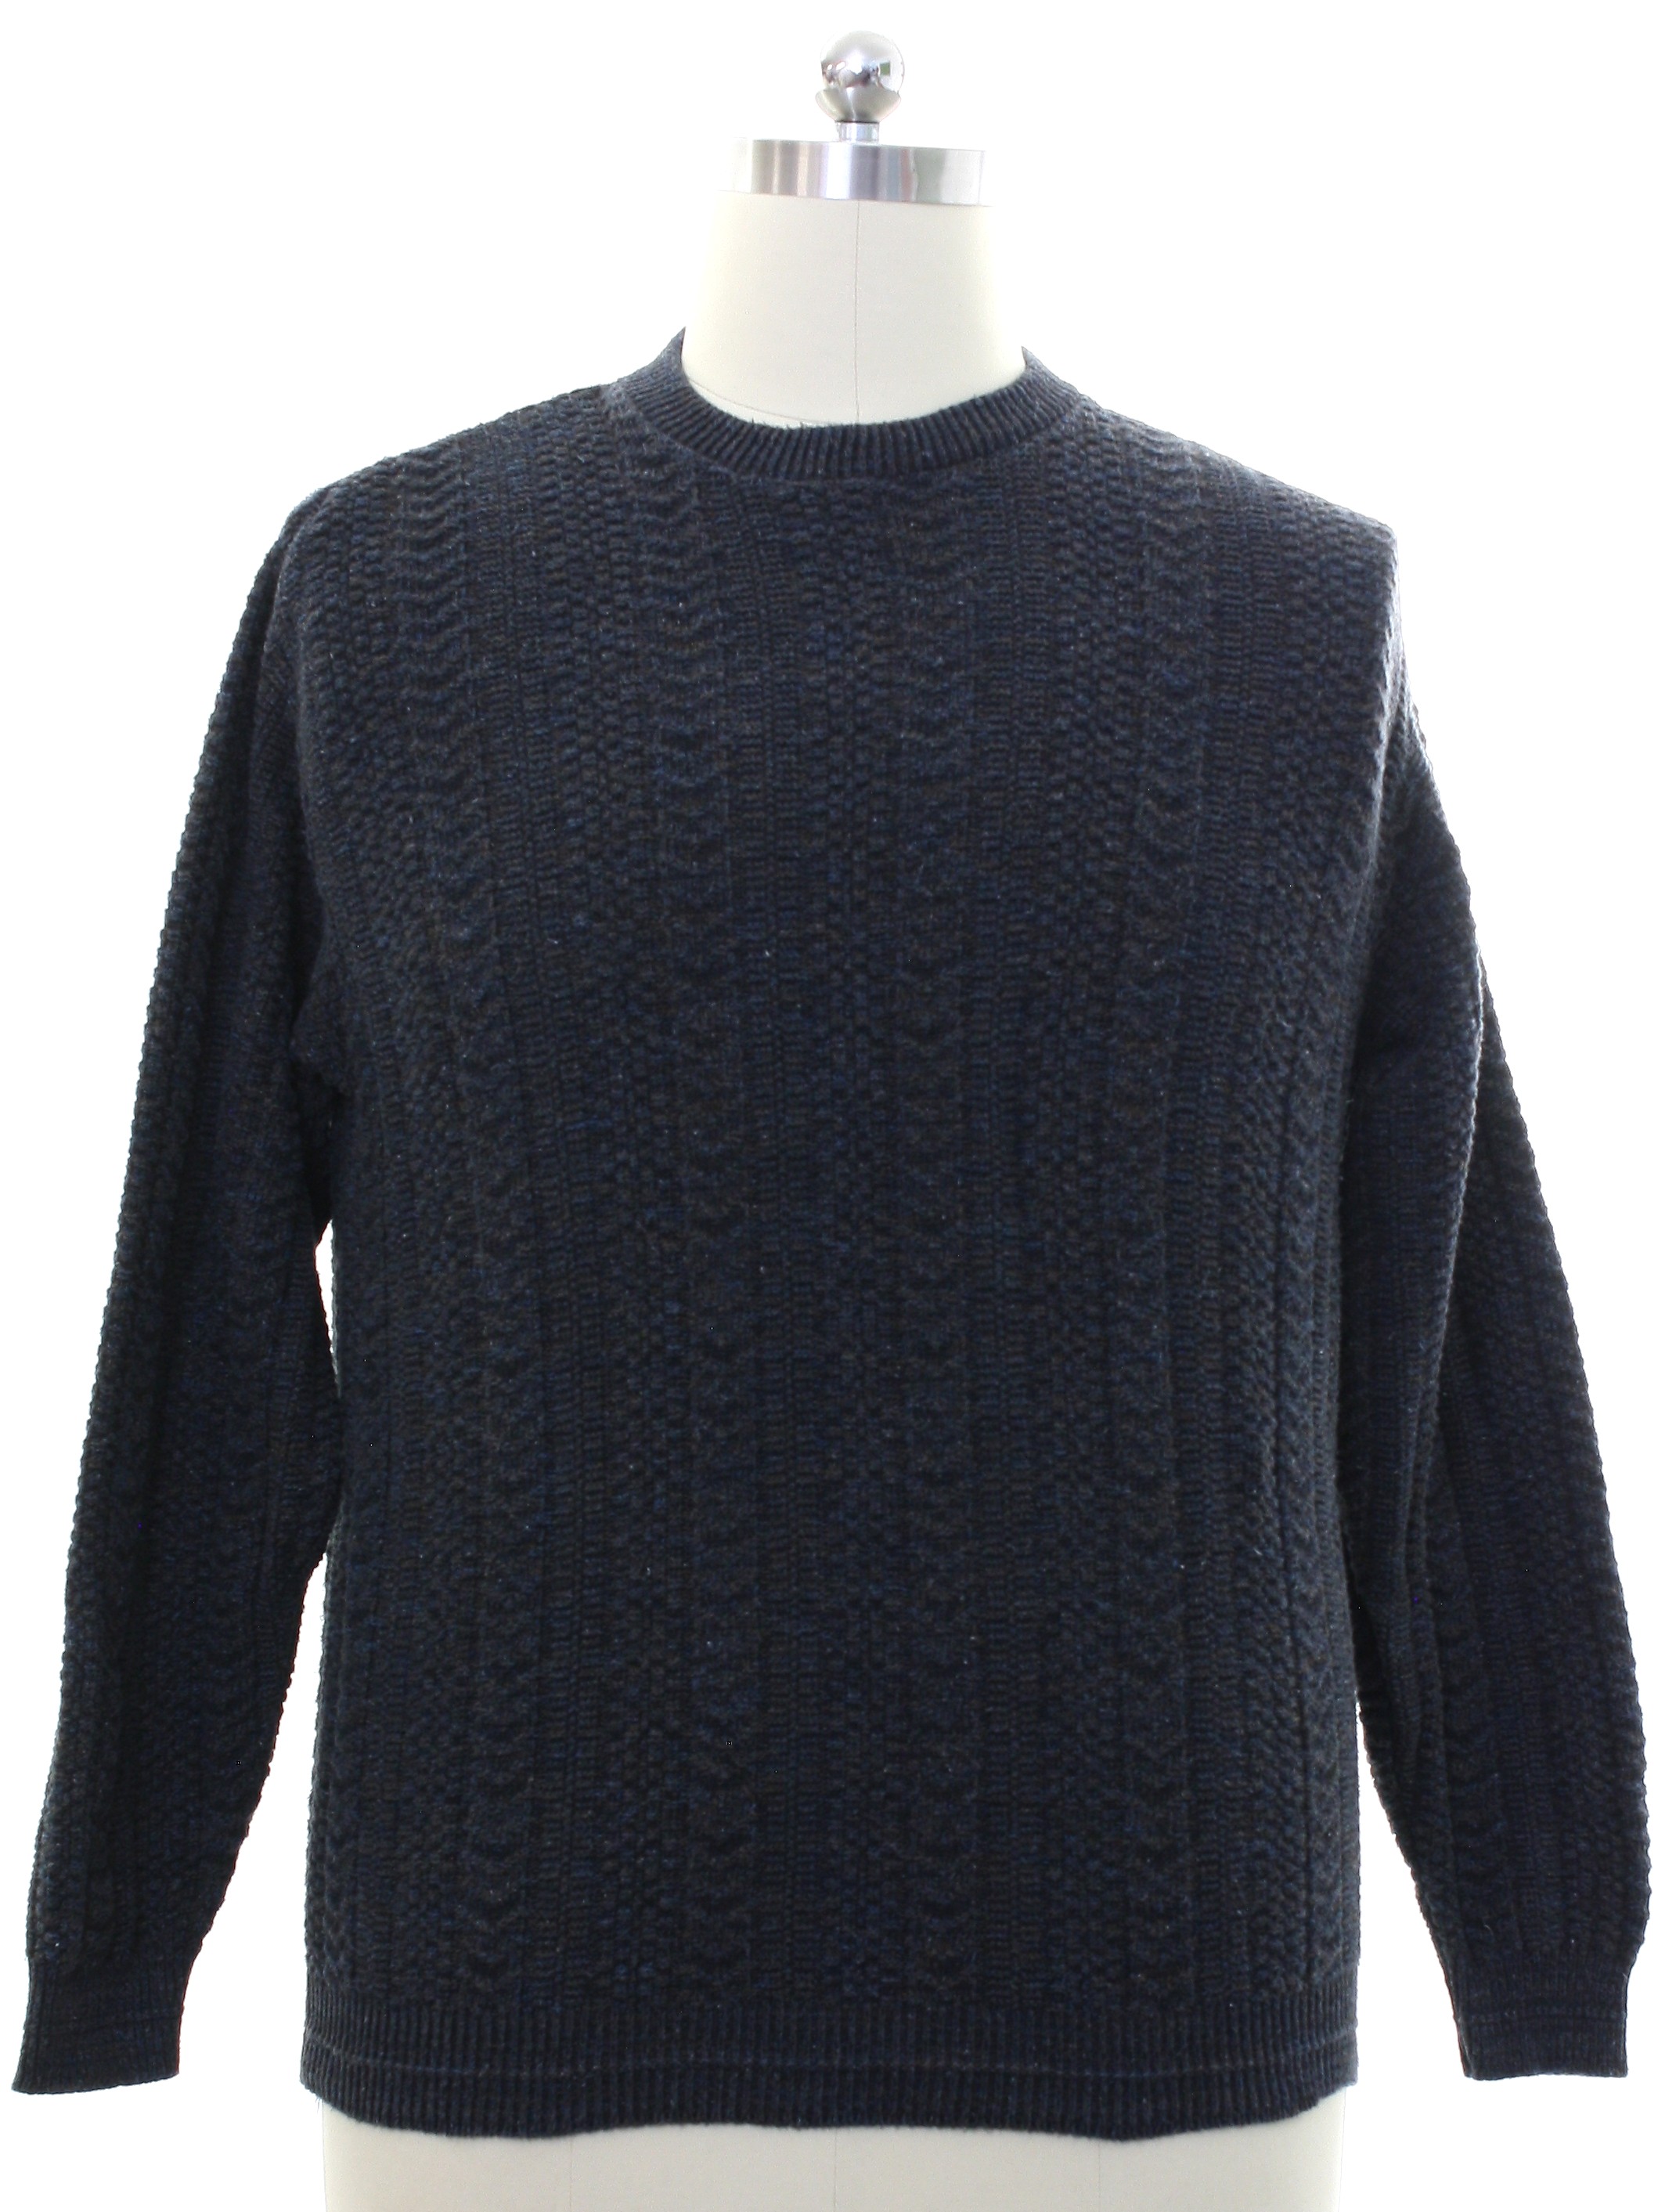 Bill Blass Eighties Vintage Sweater: Late 80s or Early 90s -Bill Blass ...